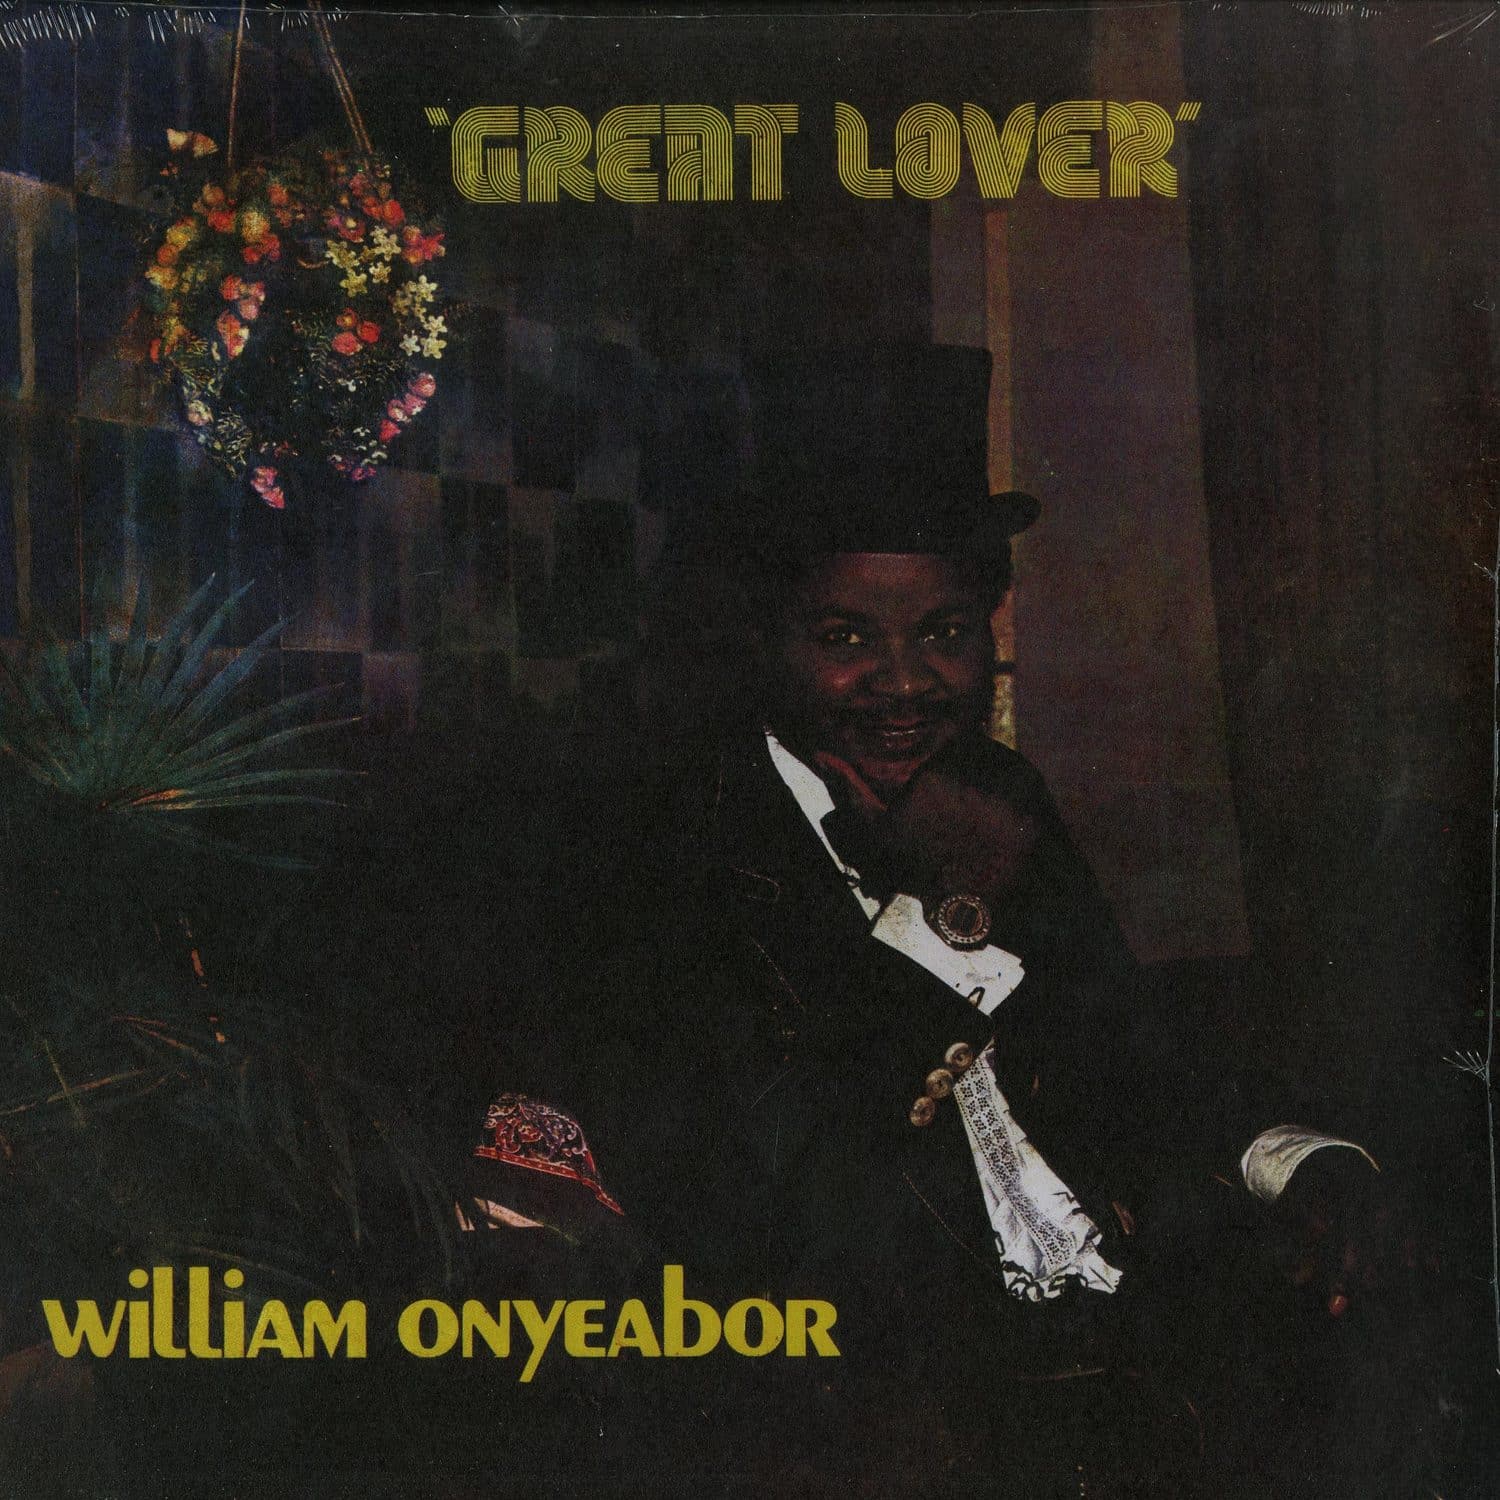 William Onyeabor - GREAT LOVER 